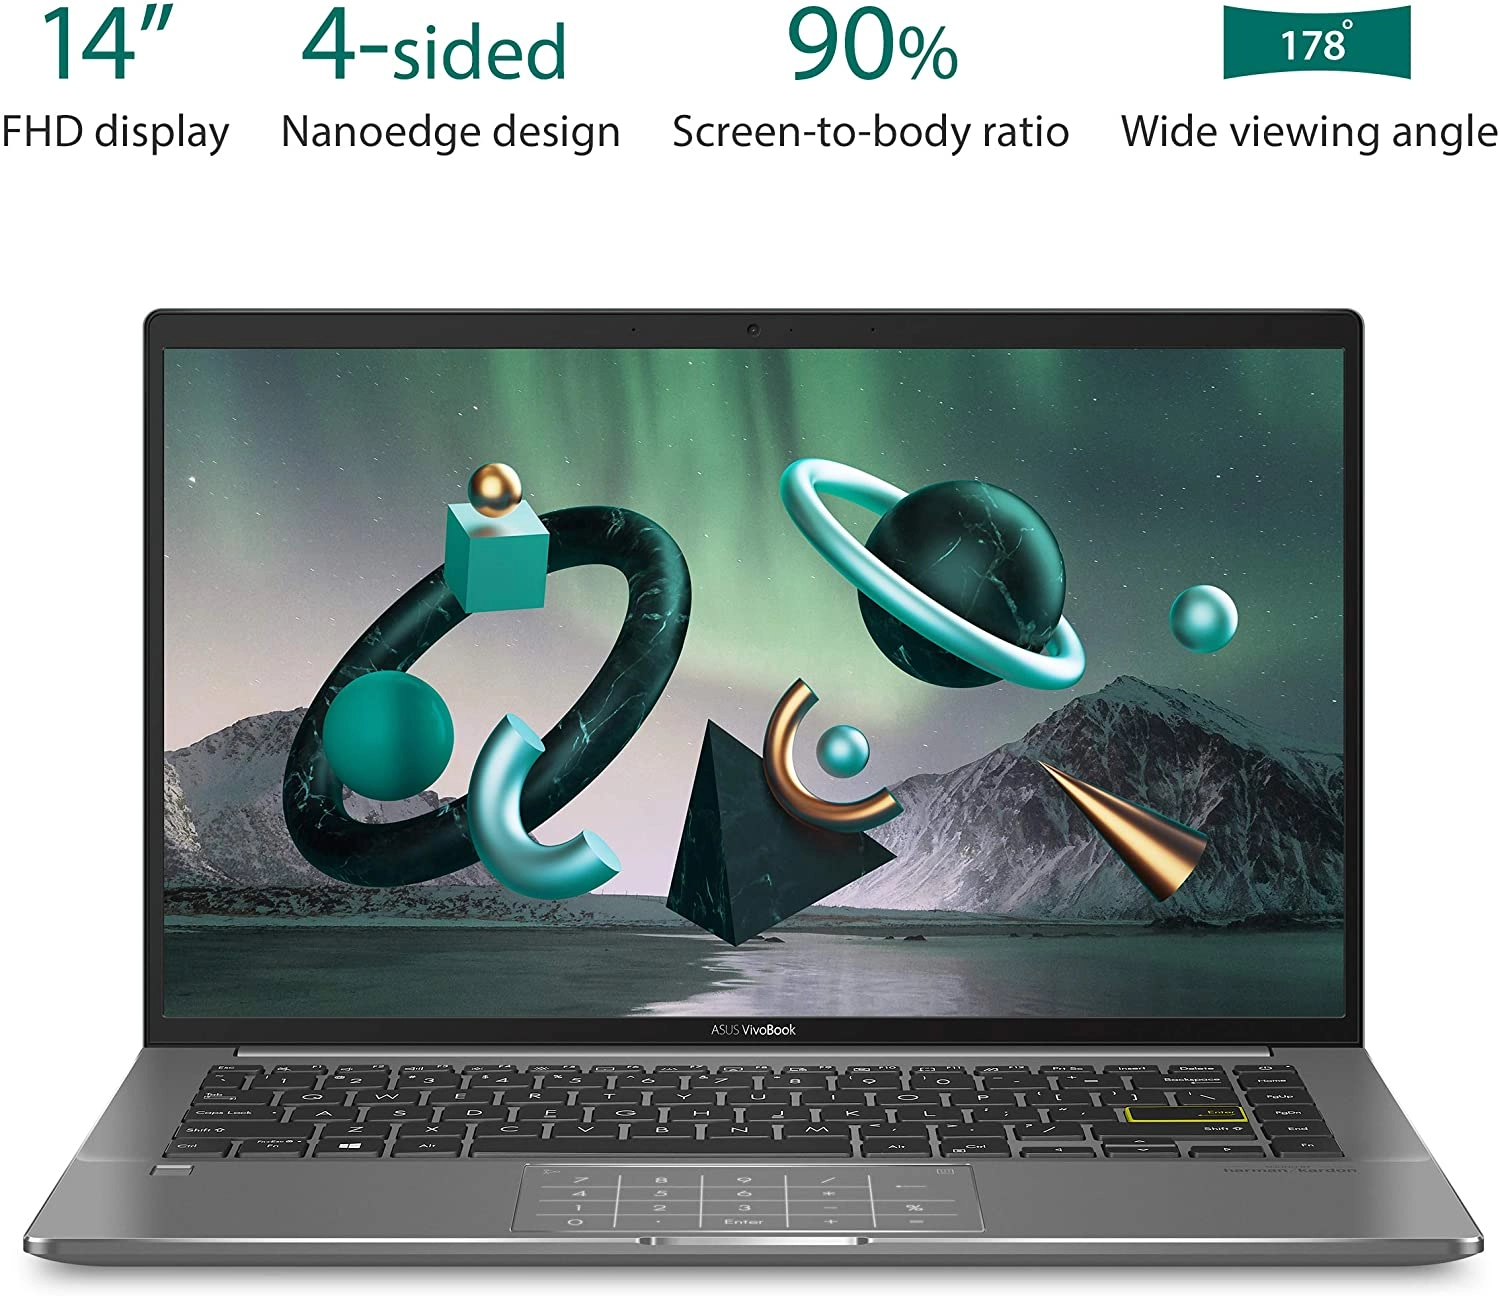 Asus VivoBook S laptop image